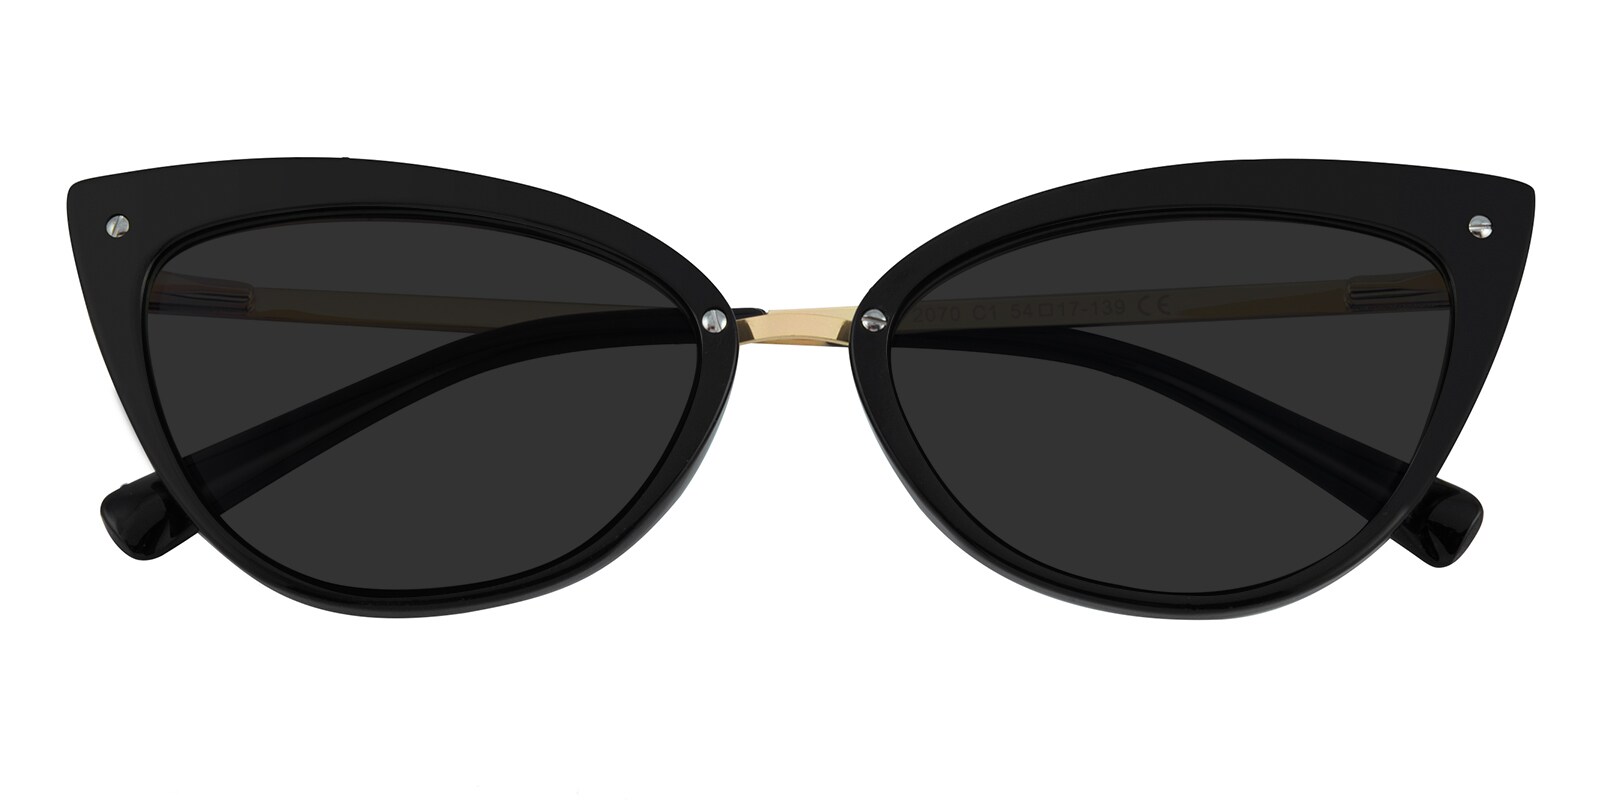 Cat Eye Sunglasses, Full Frame Black TR90,Metal,blend Material - SUP1144